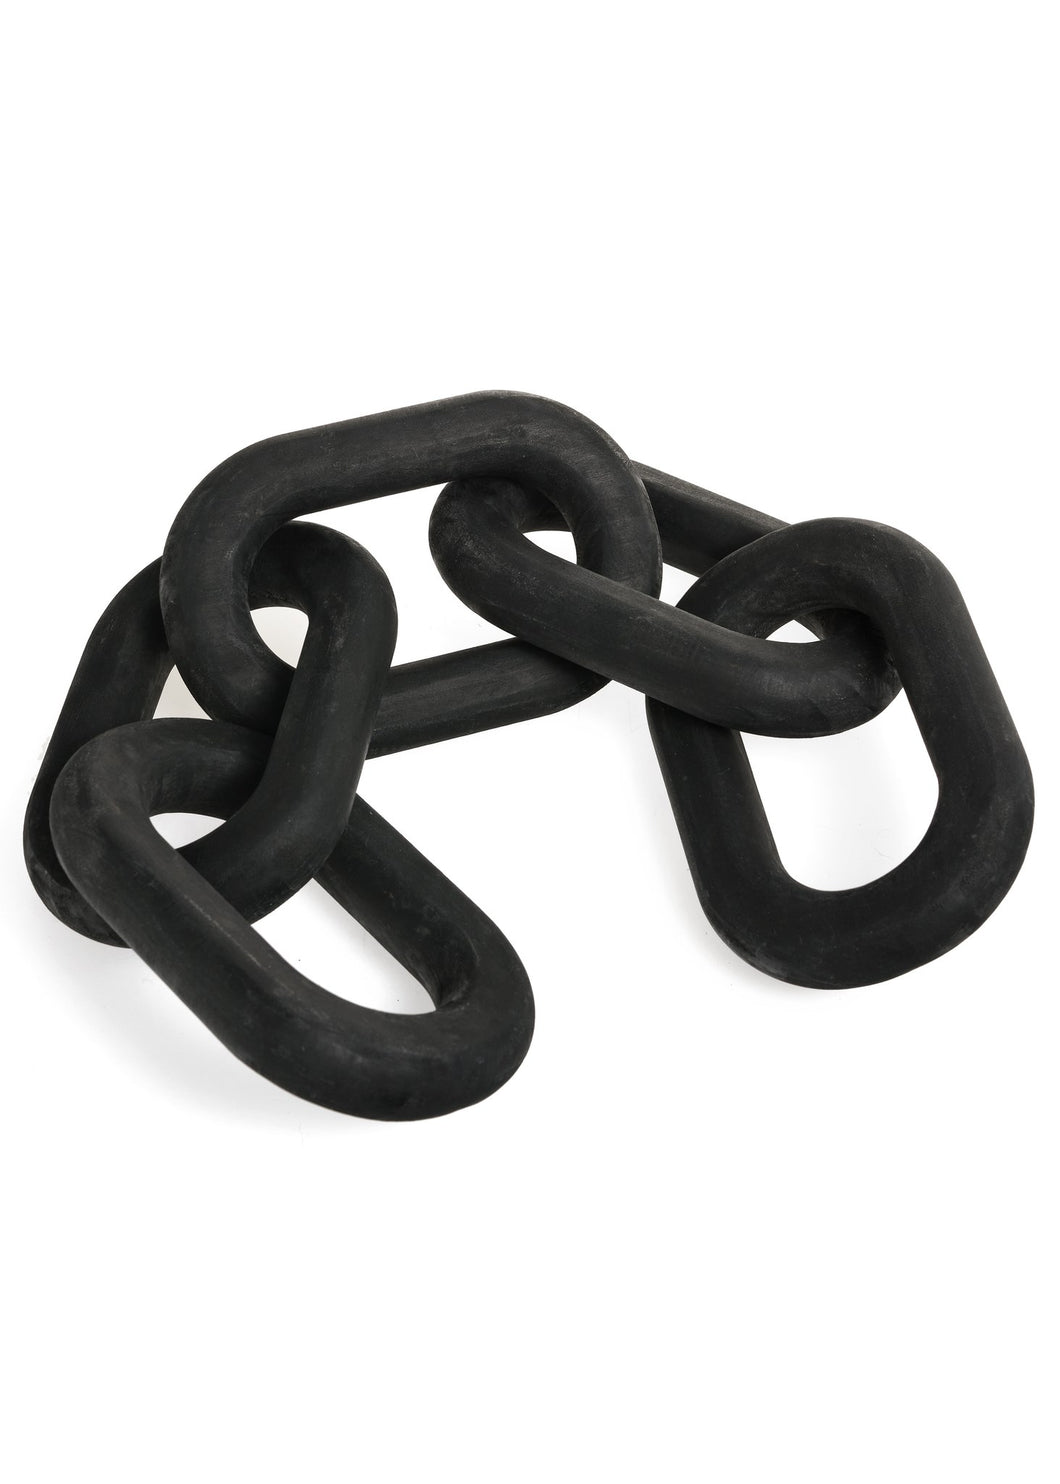 Wood Decorative Chain Links, Black